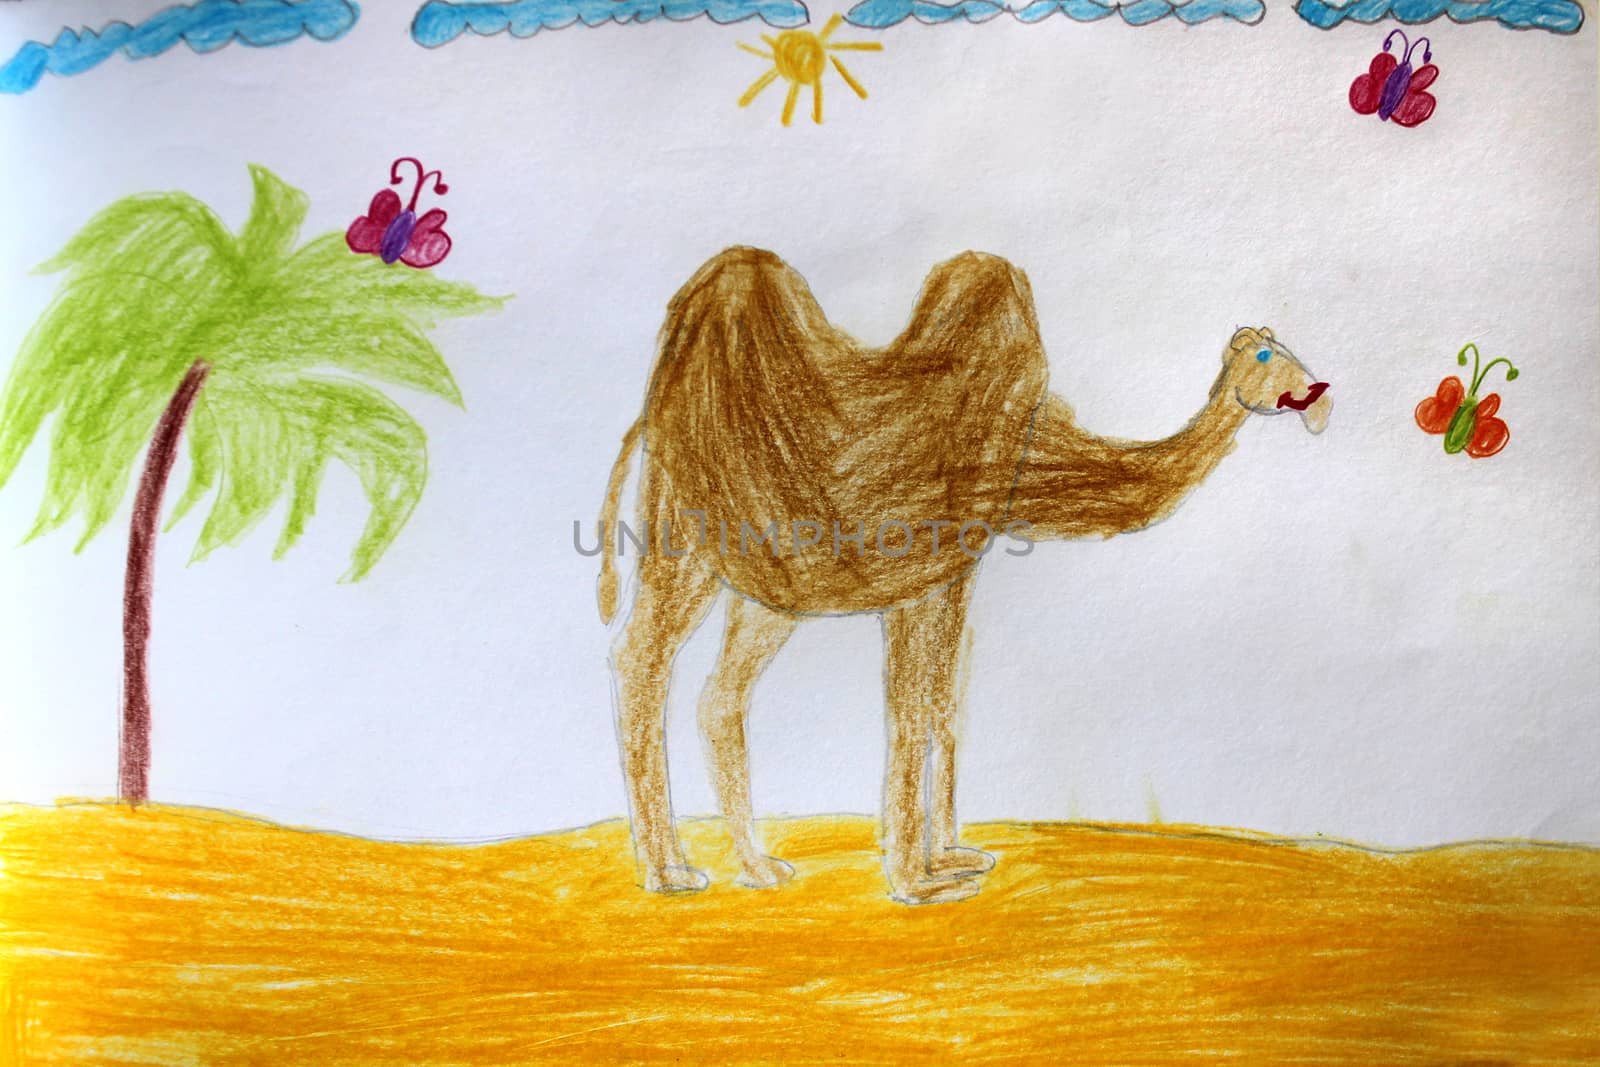 Children's drawing of camel standing in the desert